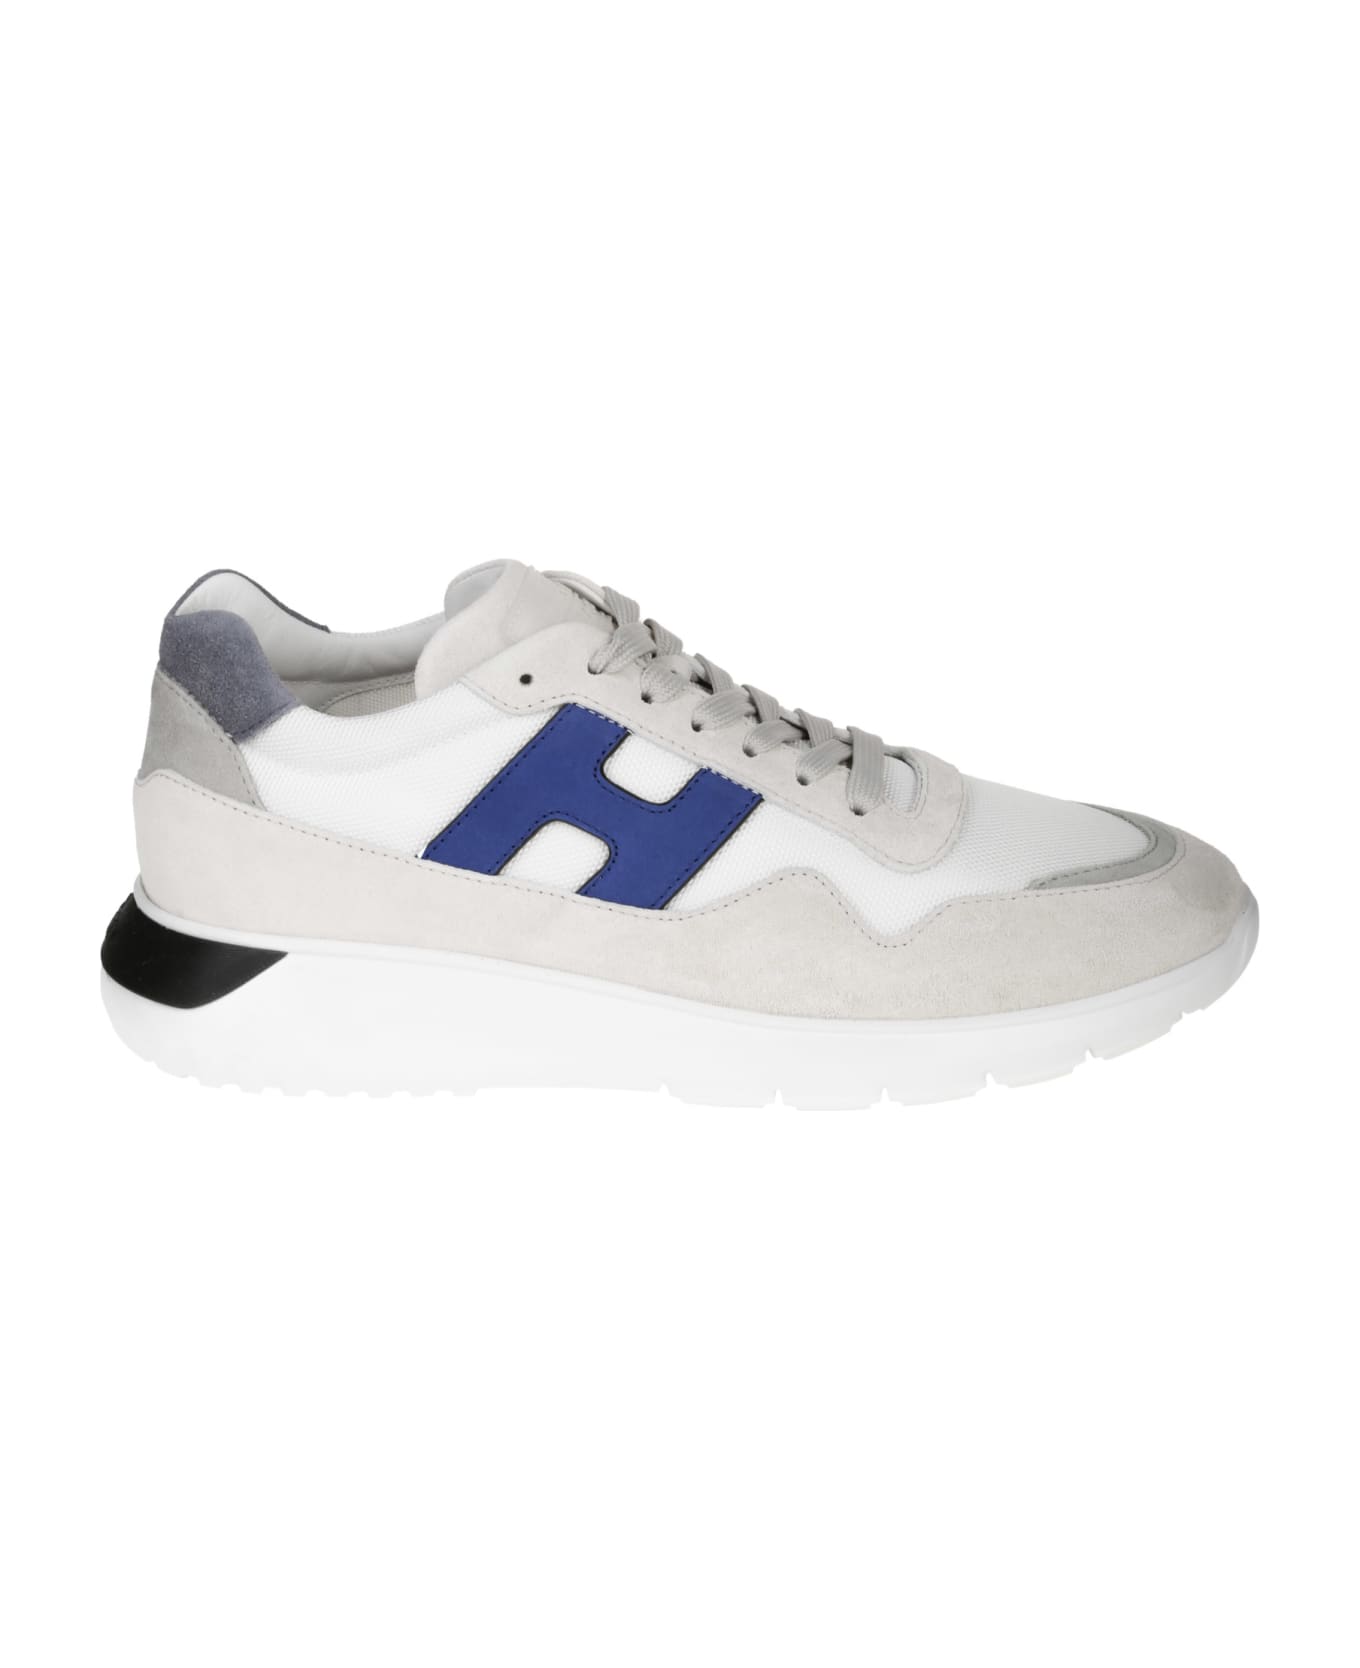 Hogan Interactiv3 Sneakers - White